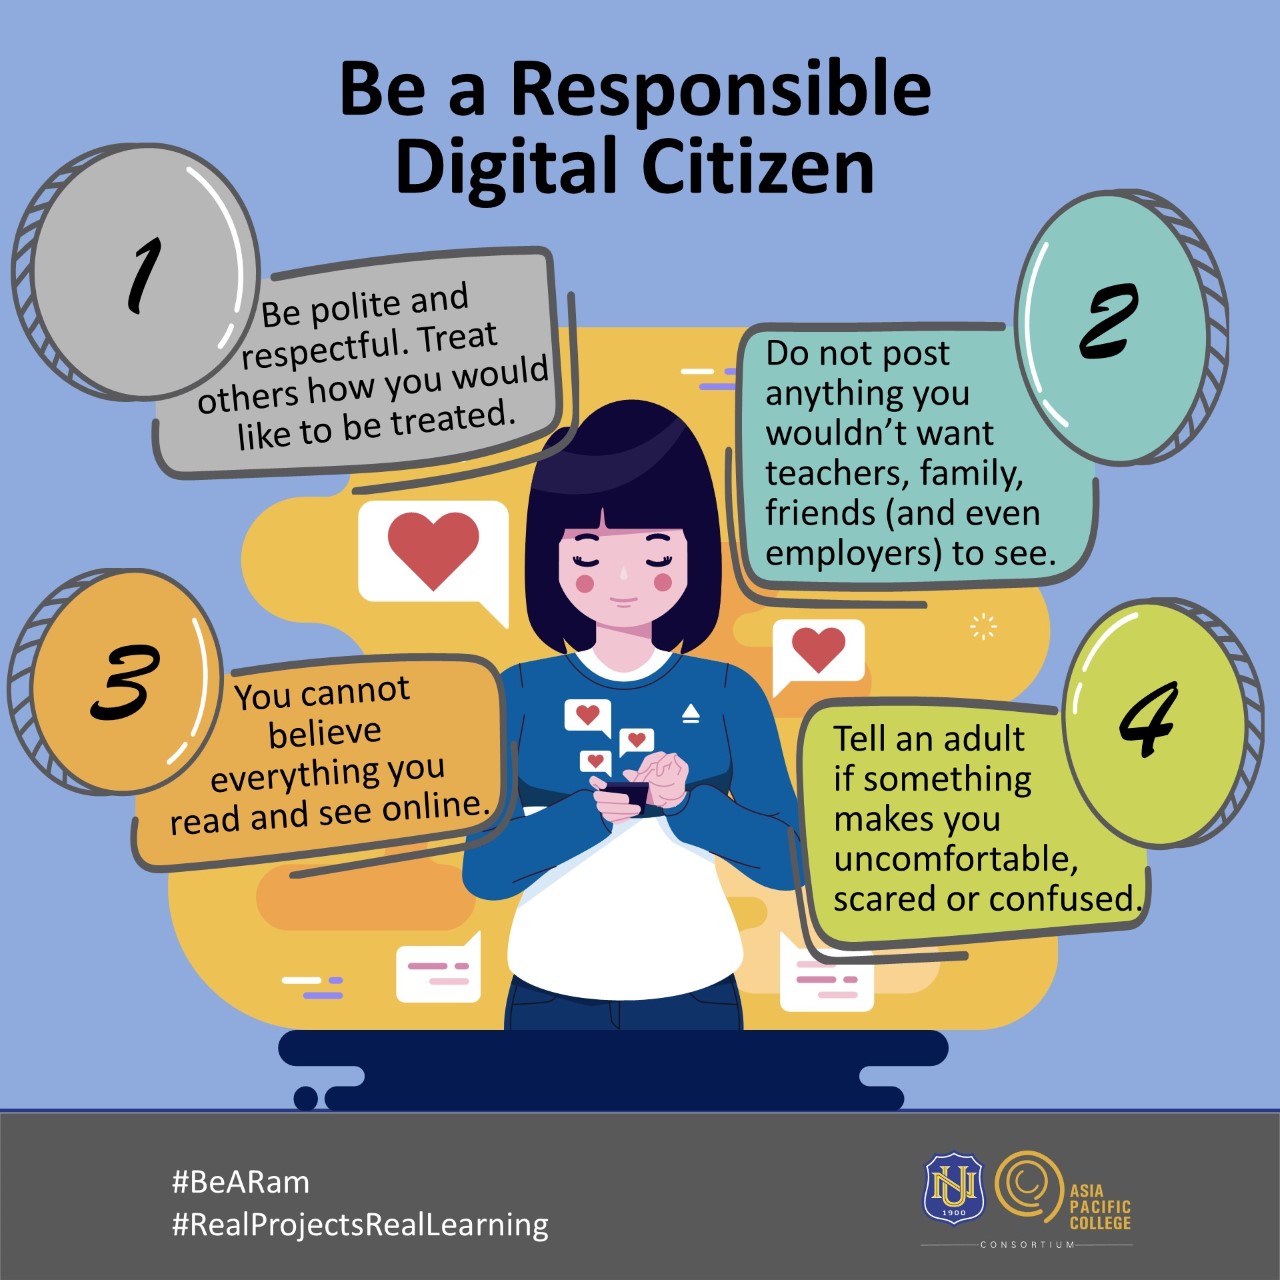 digital citizenship presentation for students